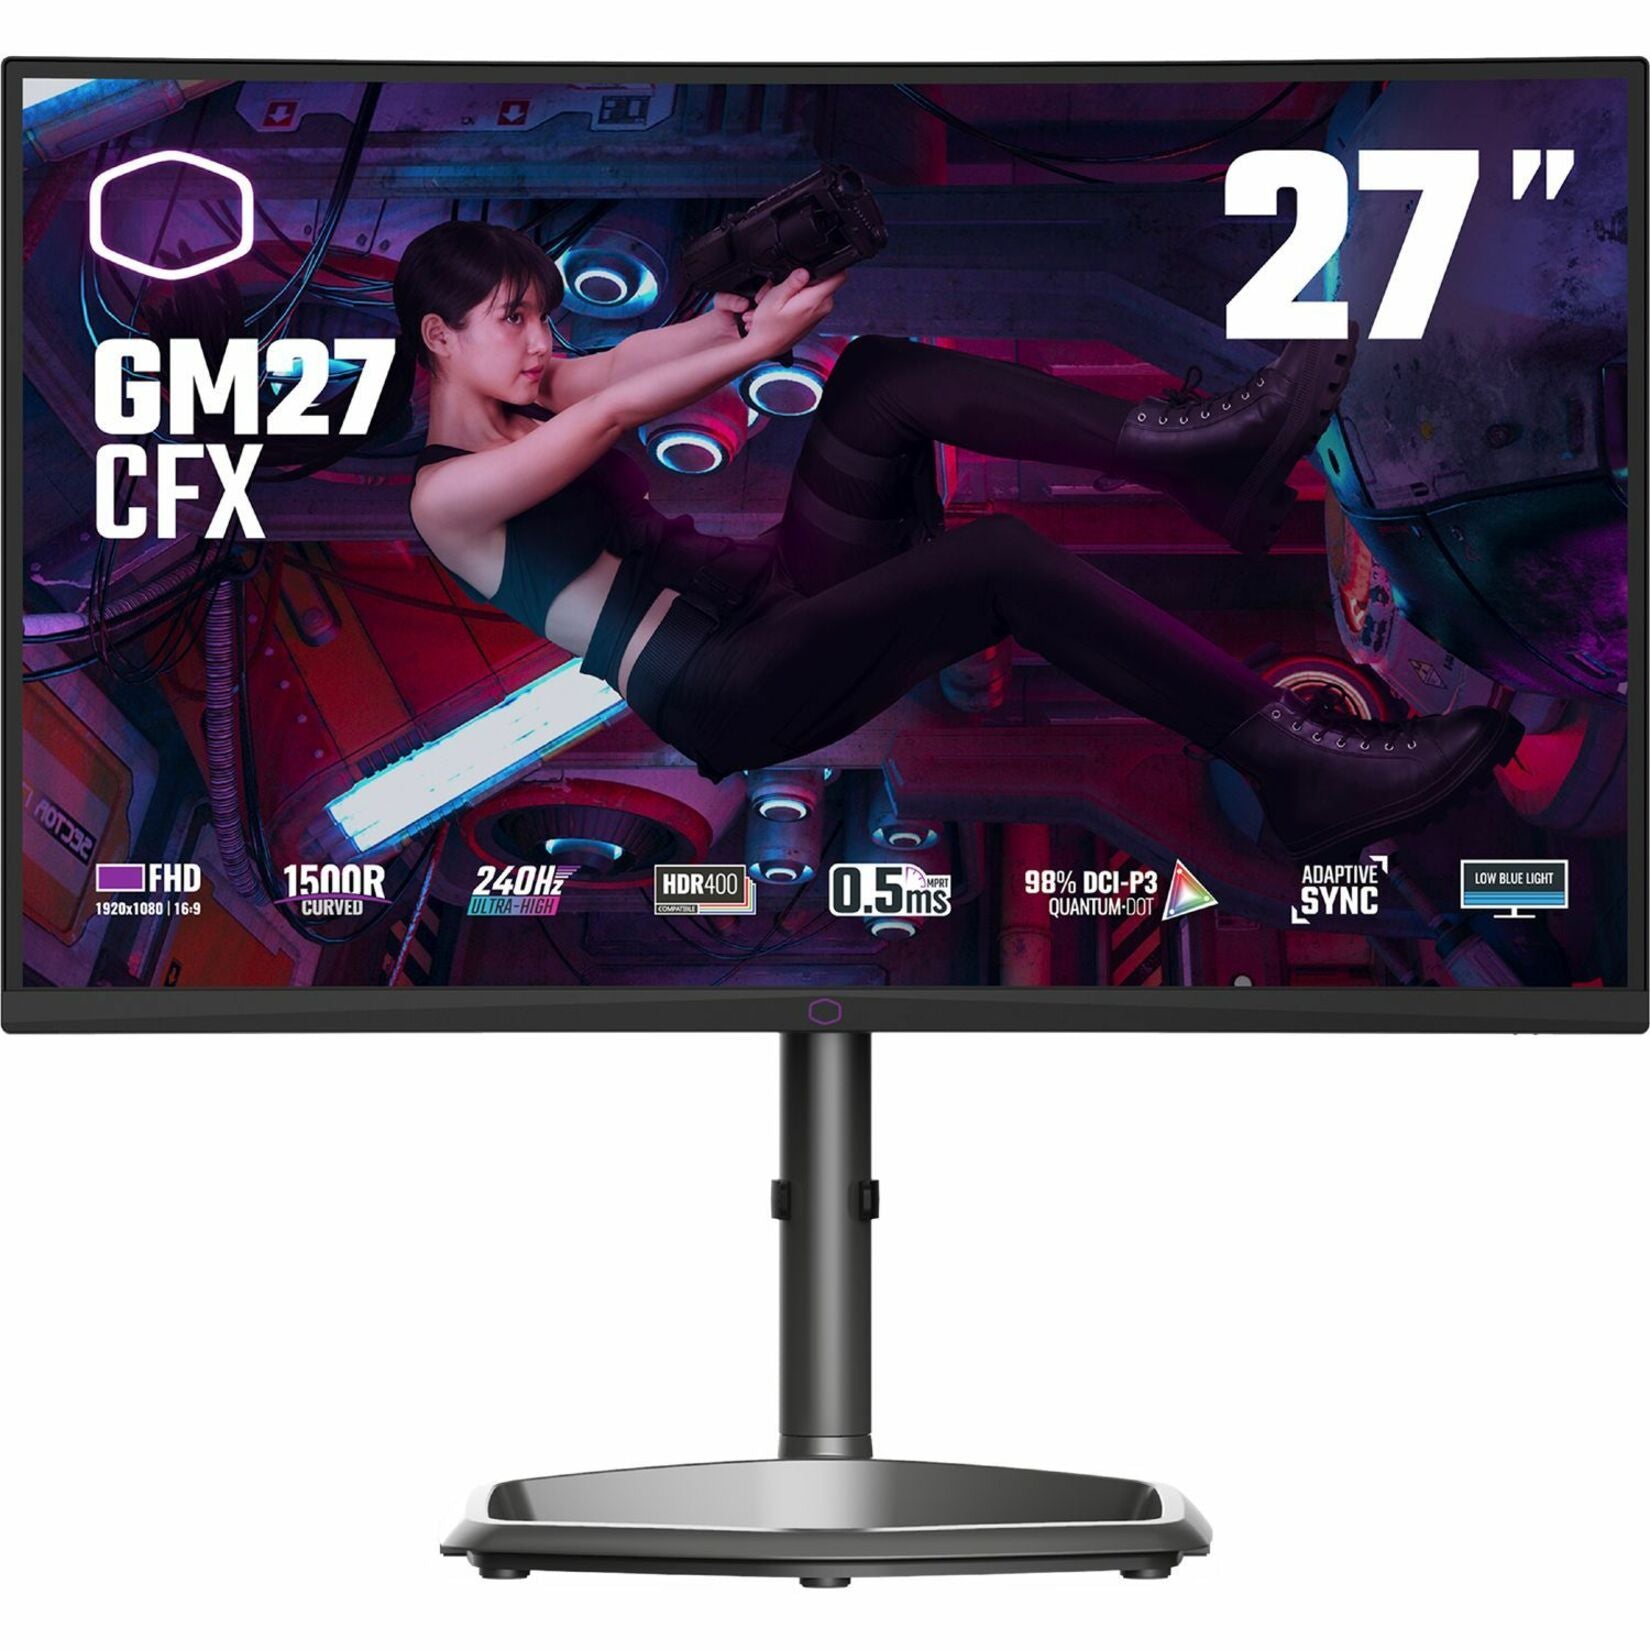 Cooler Master CMI-GM27-CFX-US GM27-CFX Widescreen Gaming LCD Monitor, 27", 240Hz, 1920 x 1080, FreeSync/G-Sync